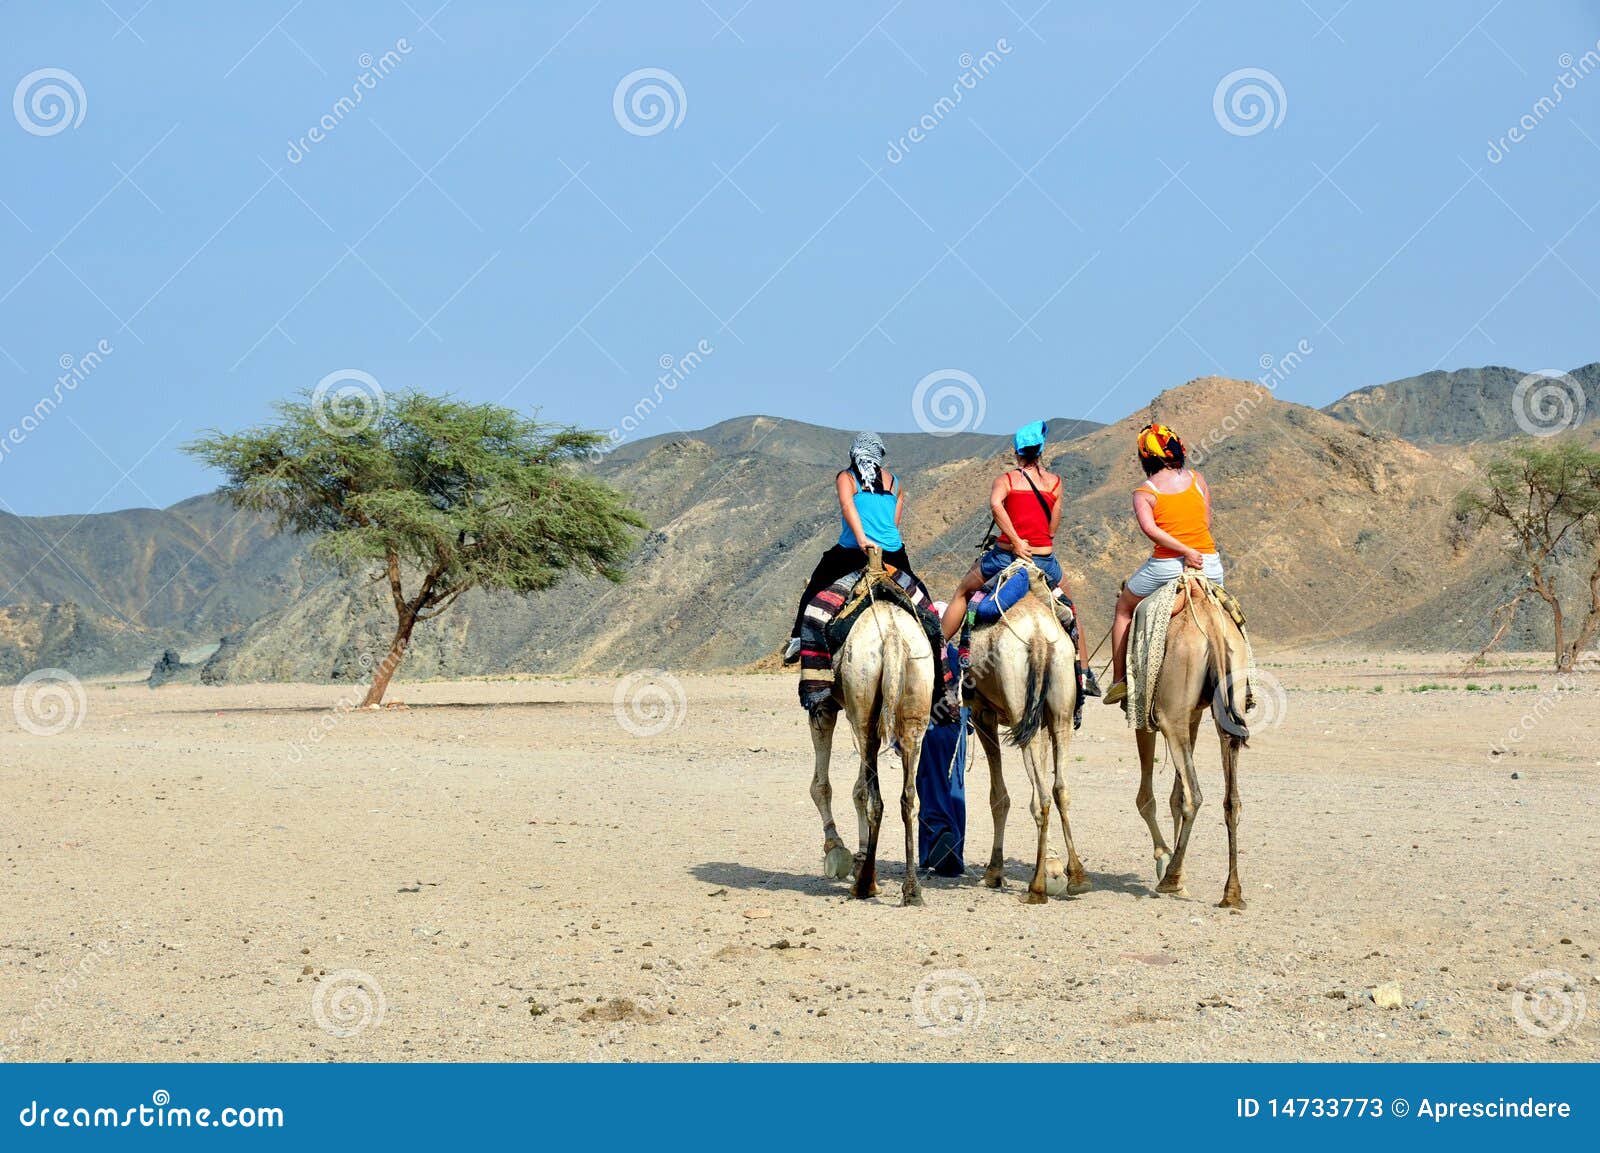 tourists on camel